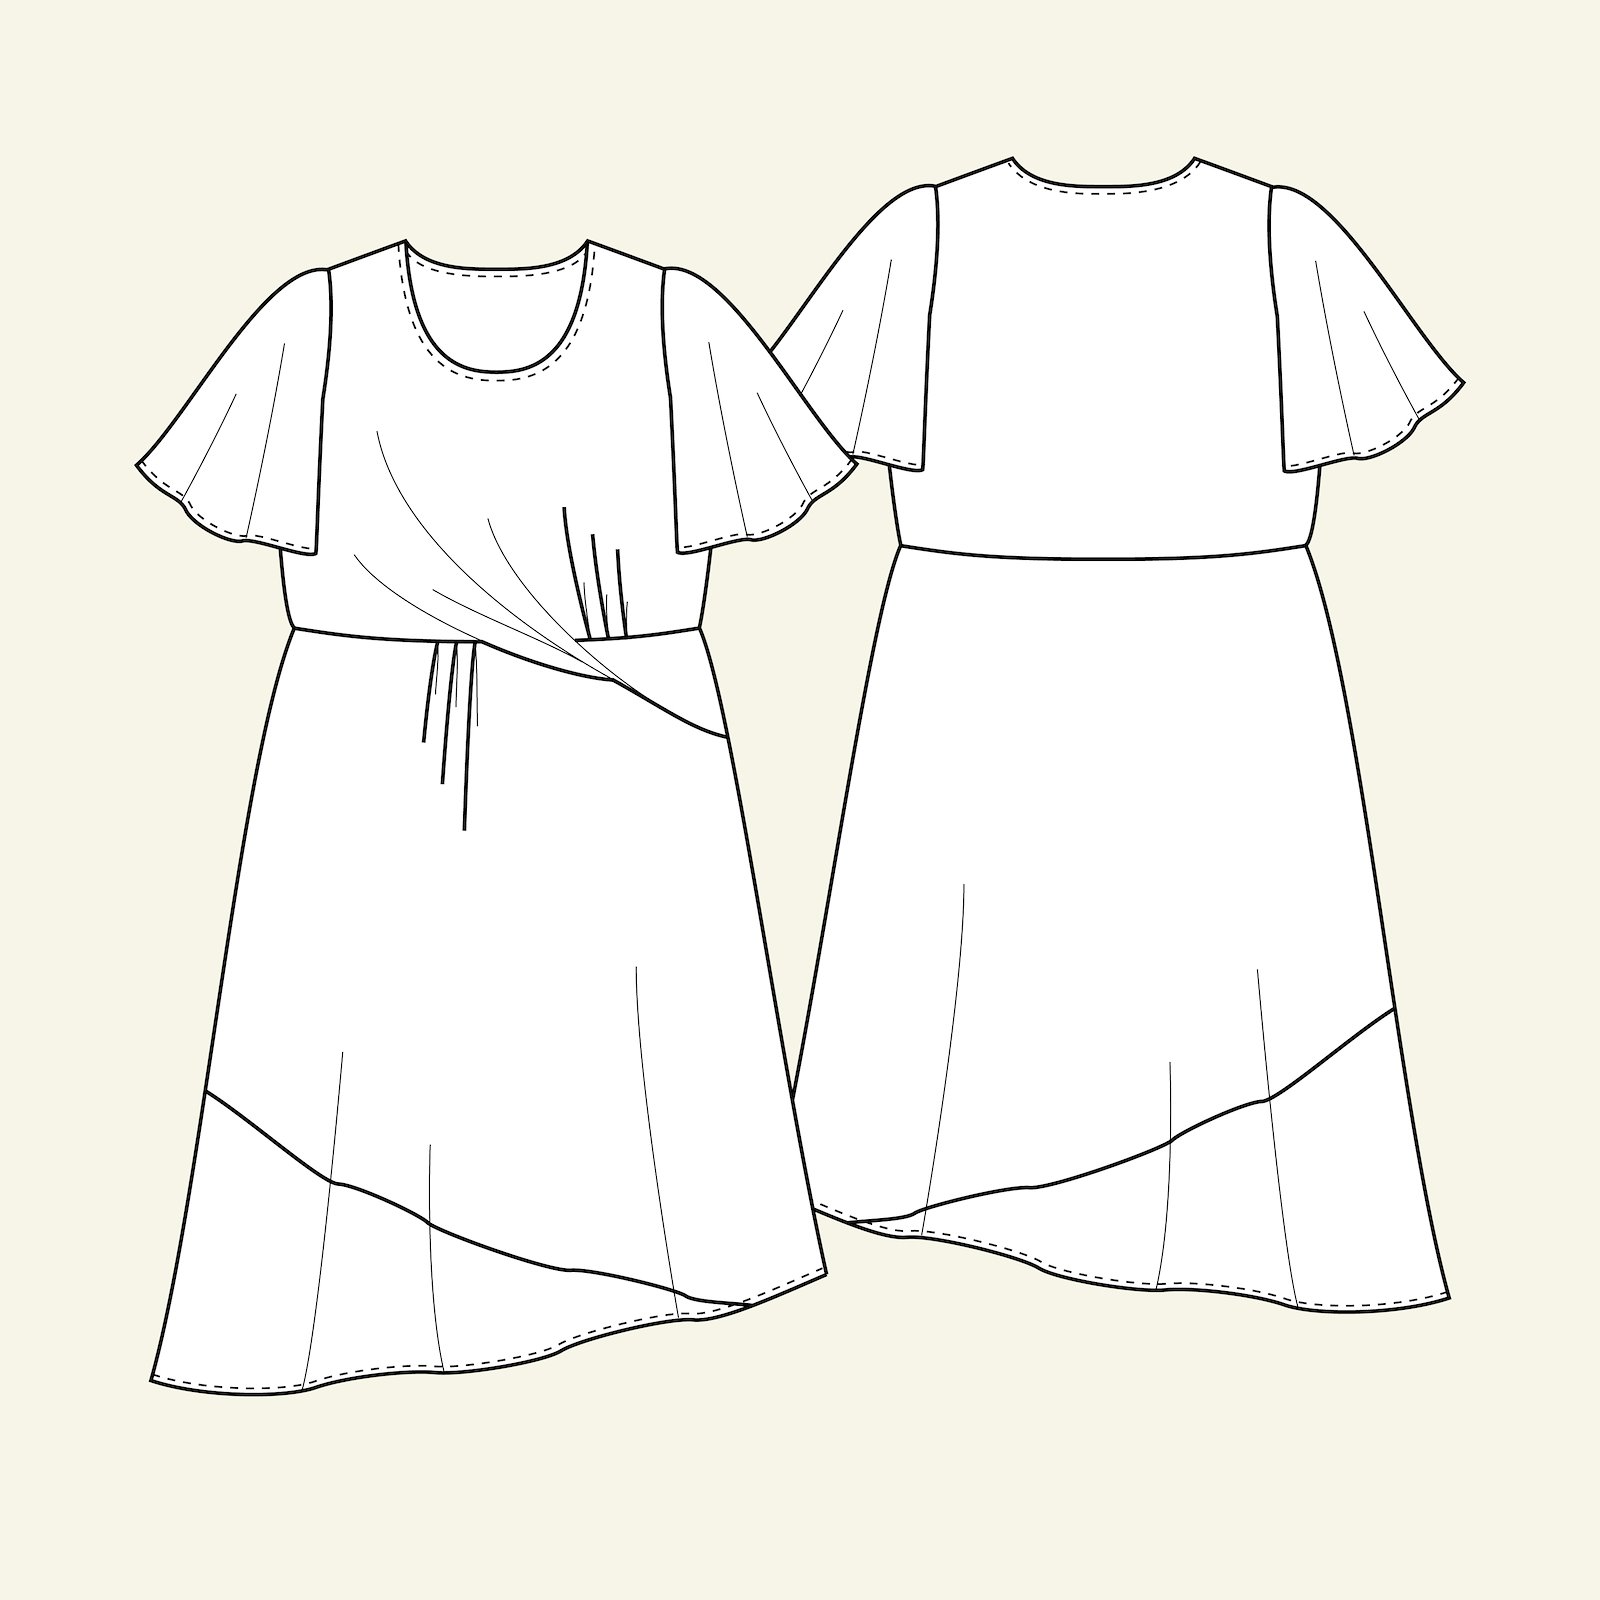 Dream dress with asymmetric cut p73019_pack